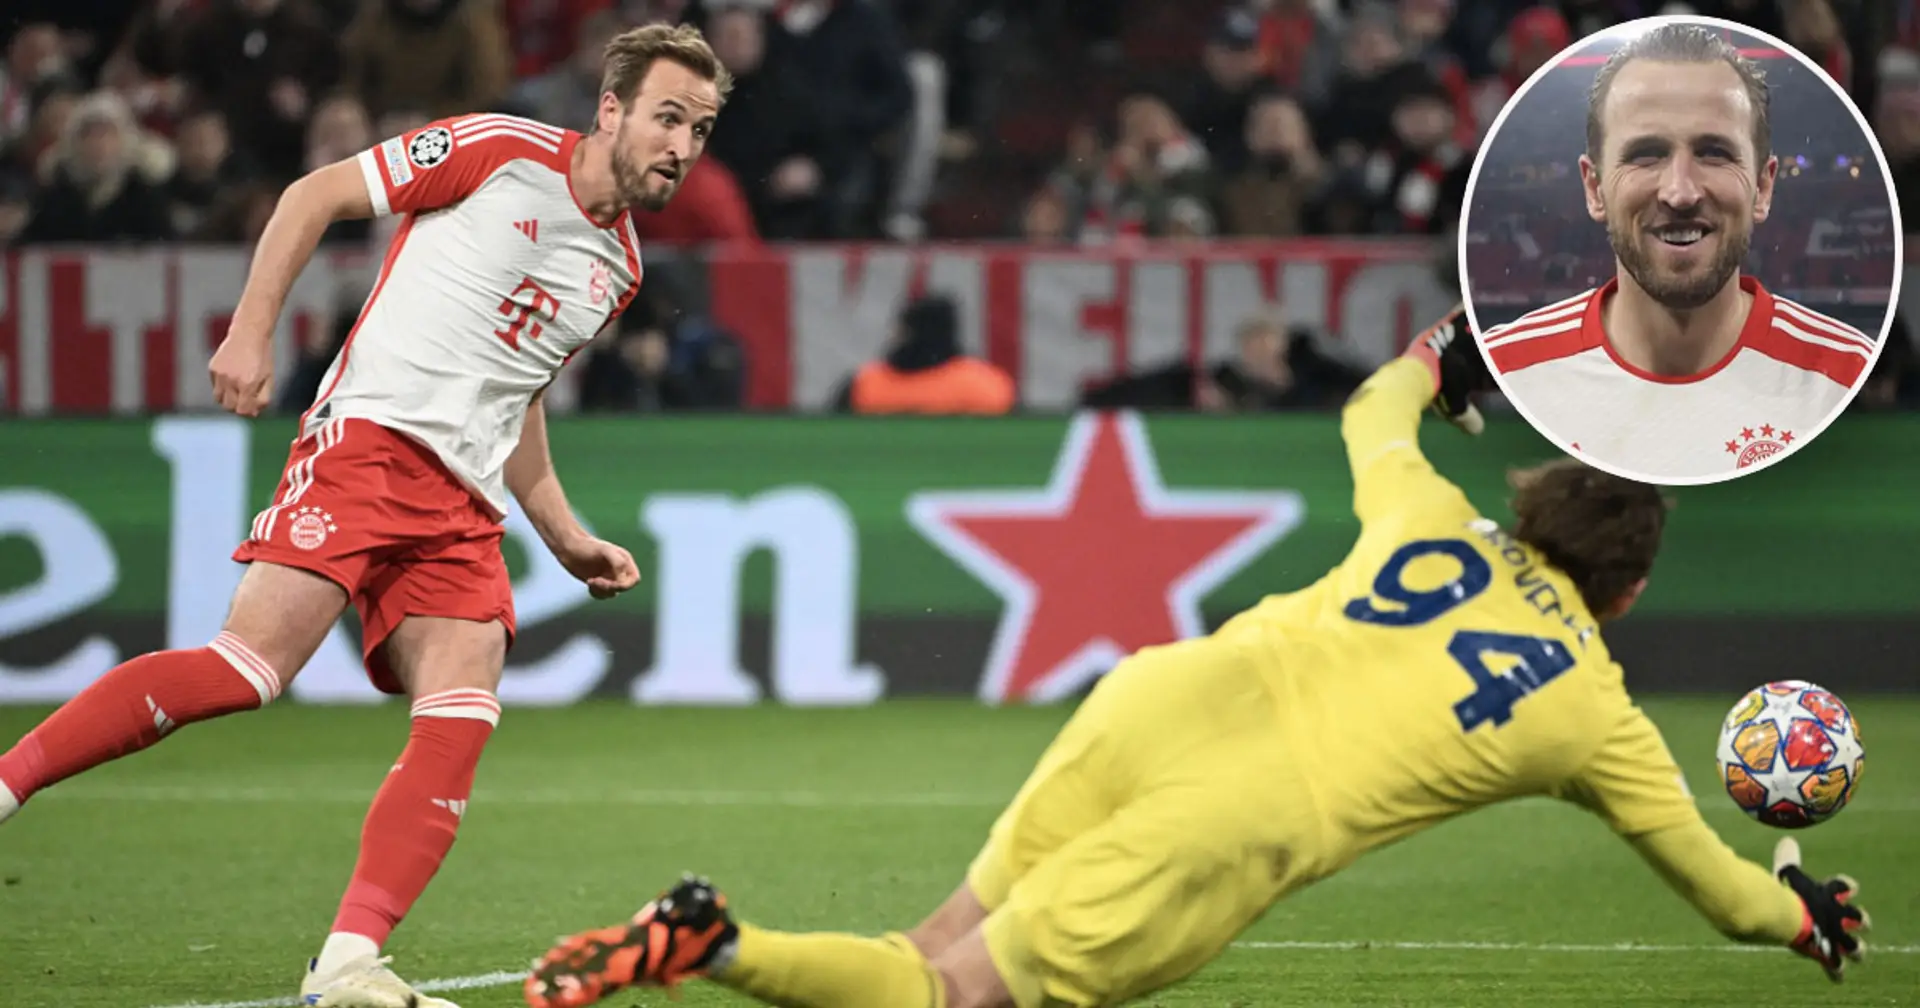 Will Harry Kane break 'no trophy curse' with Bayern Munich this season?